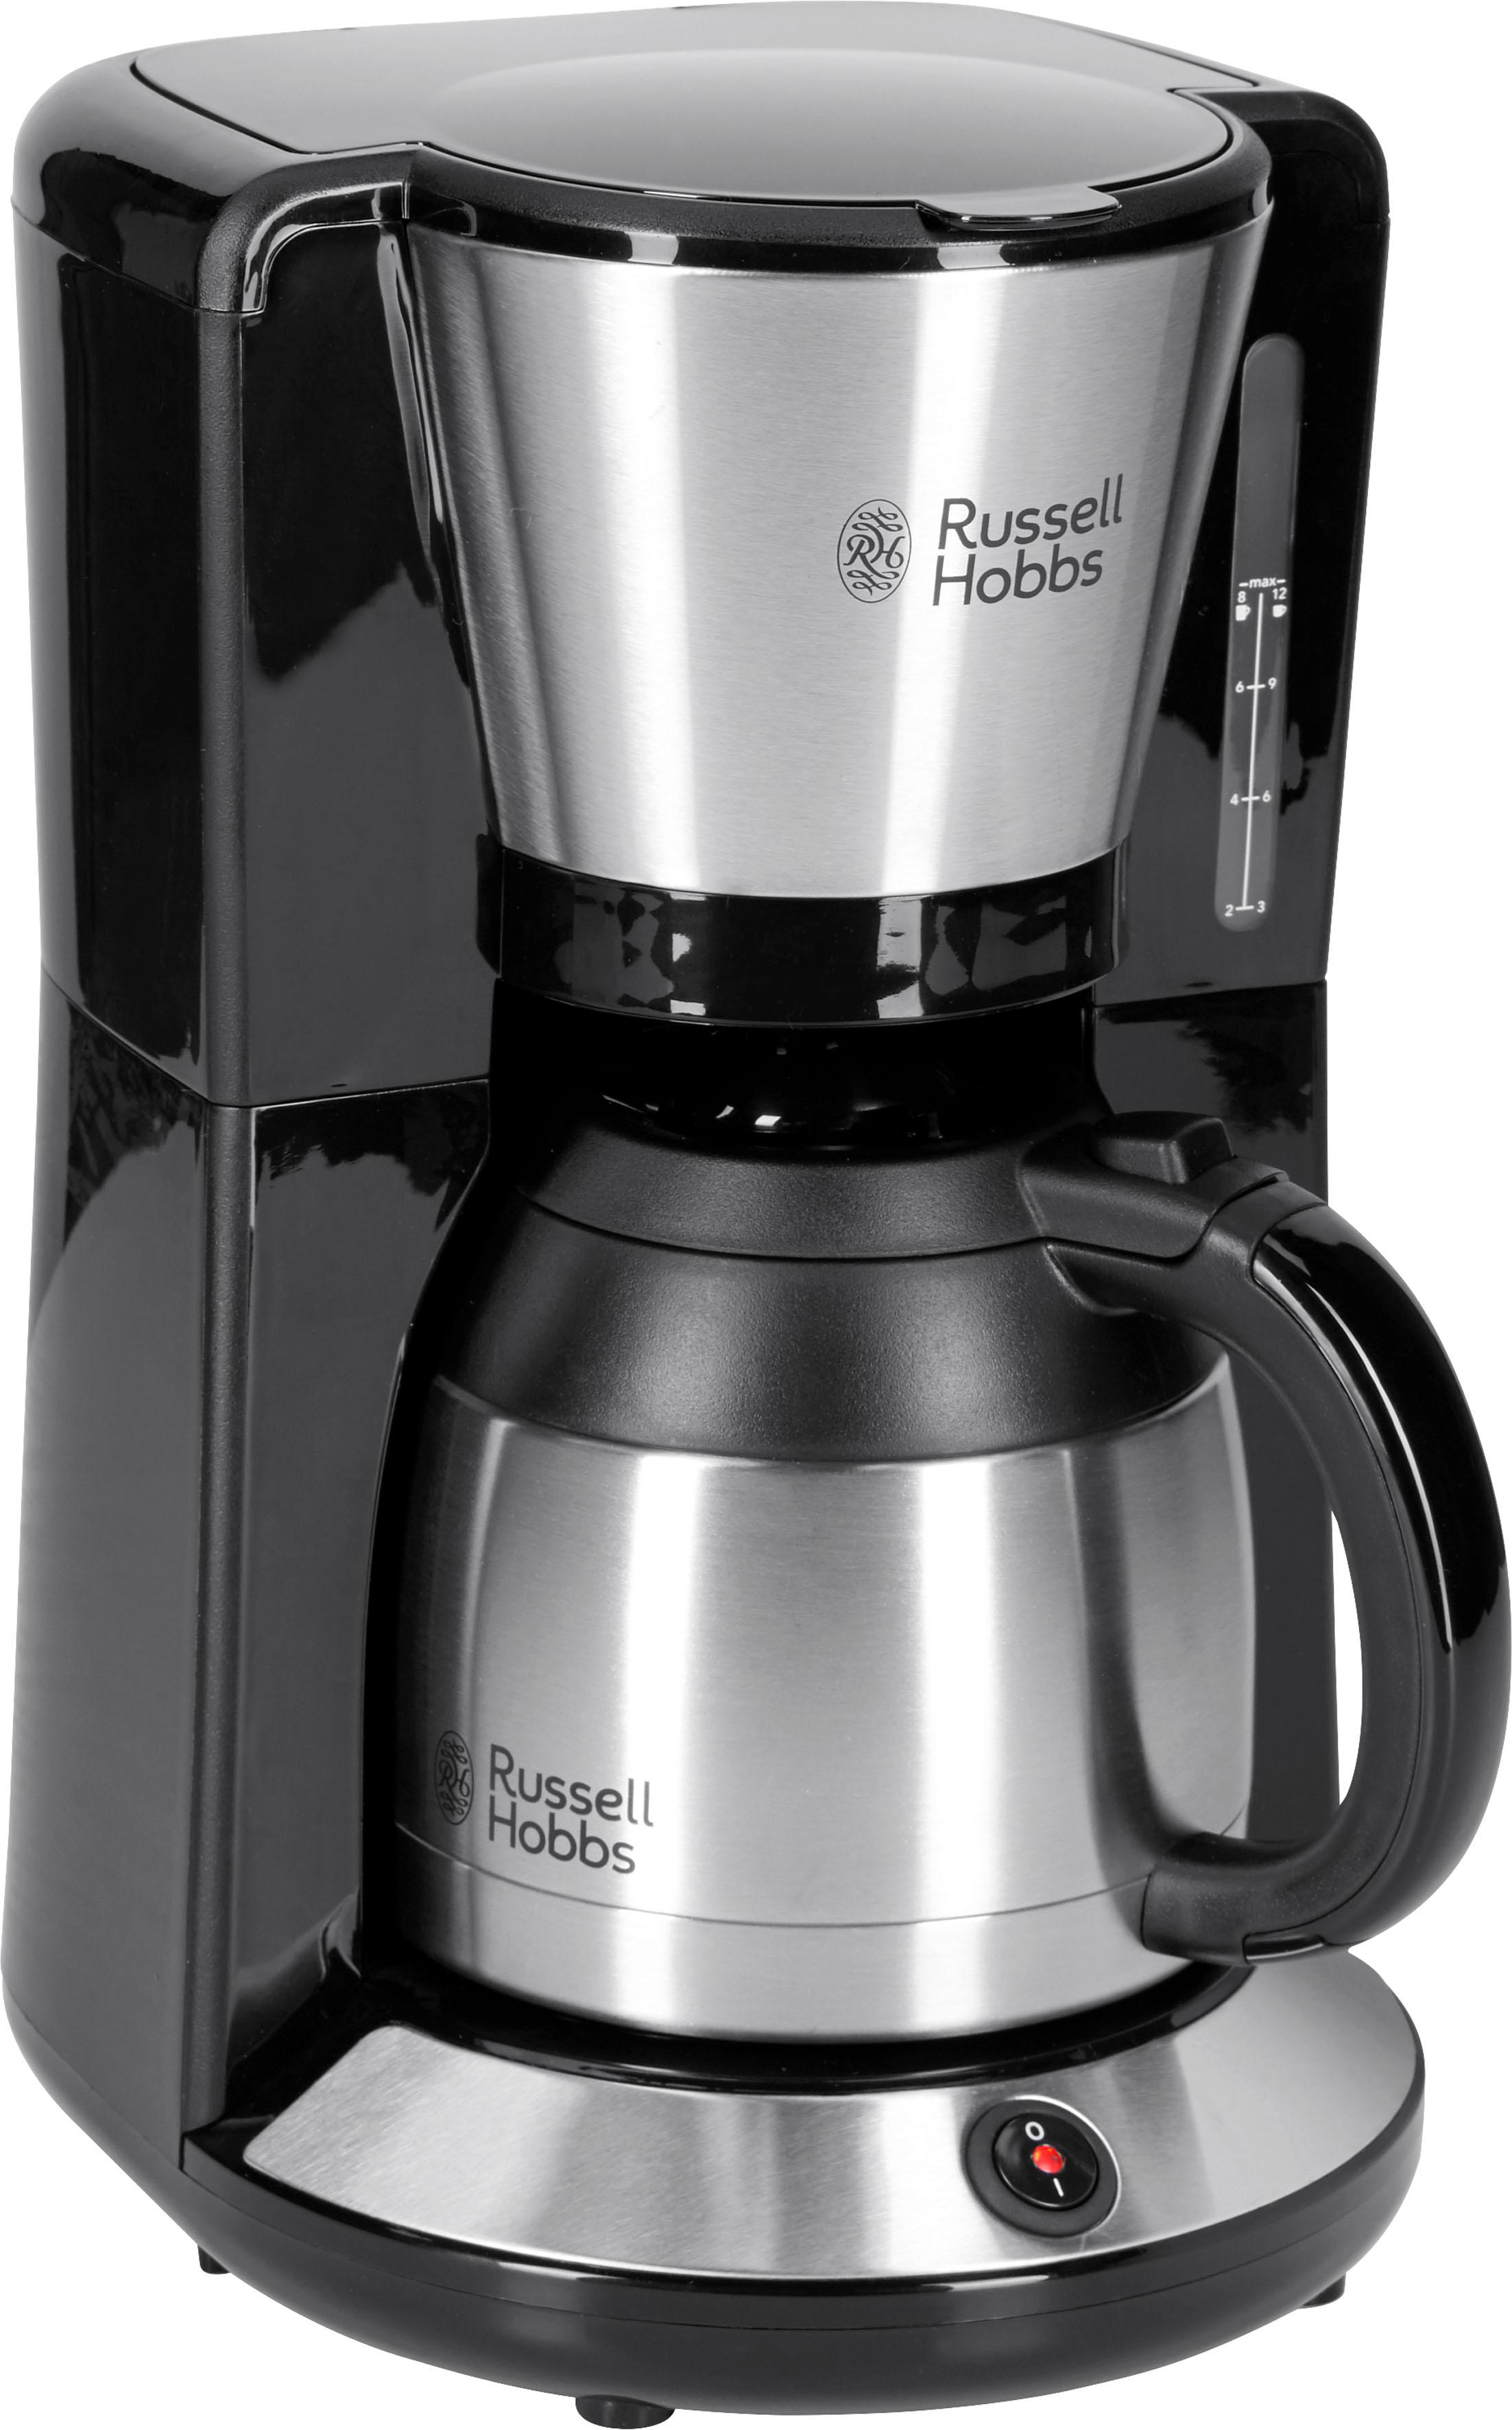 RUSSELL HOBBS Filterkaffeemaschine »Victory 24030-56«, 1x4, Digitale Glas- Kaffeemaschine auf Raten kaufen